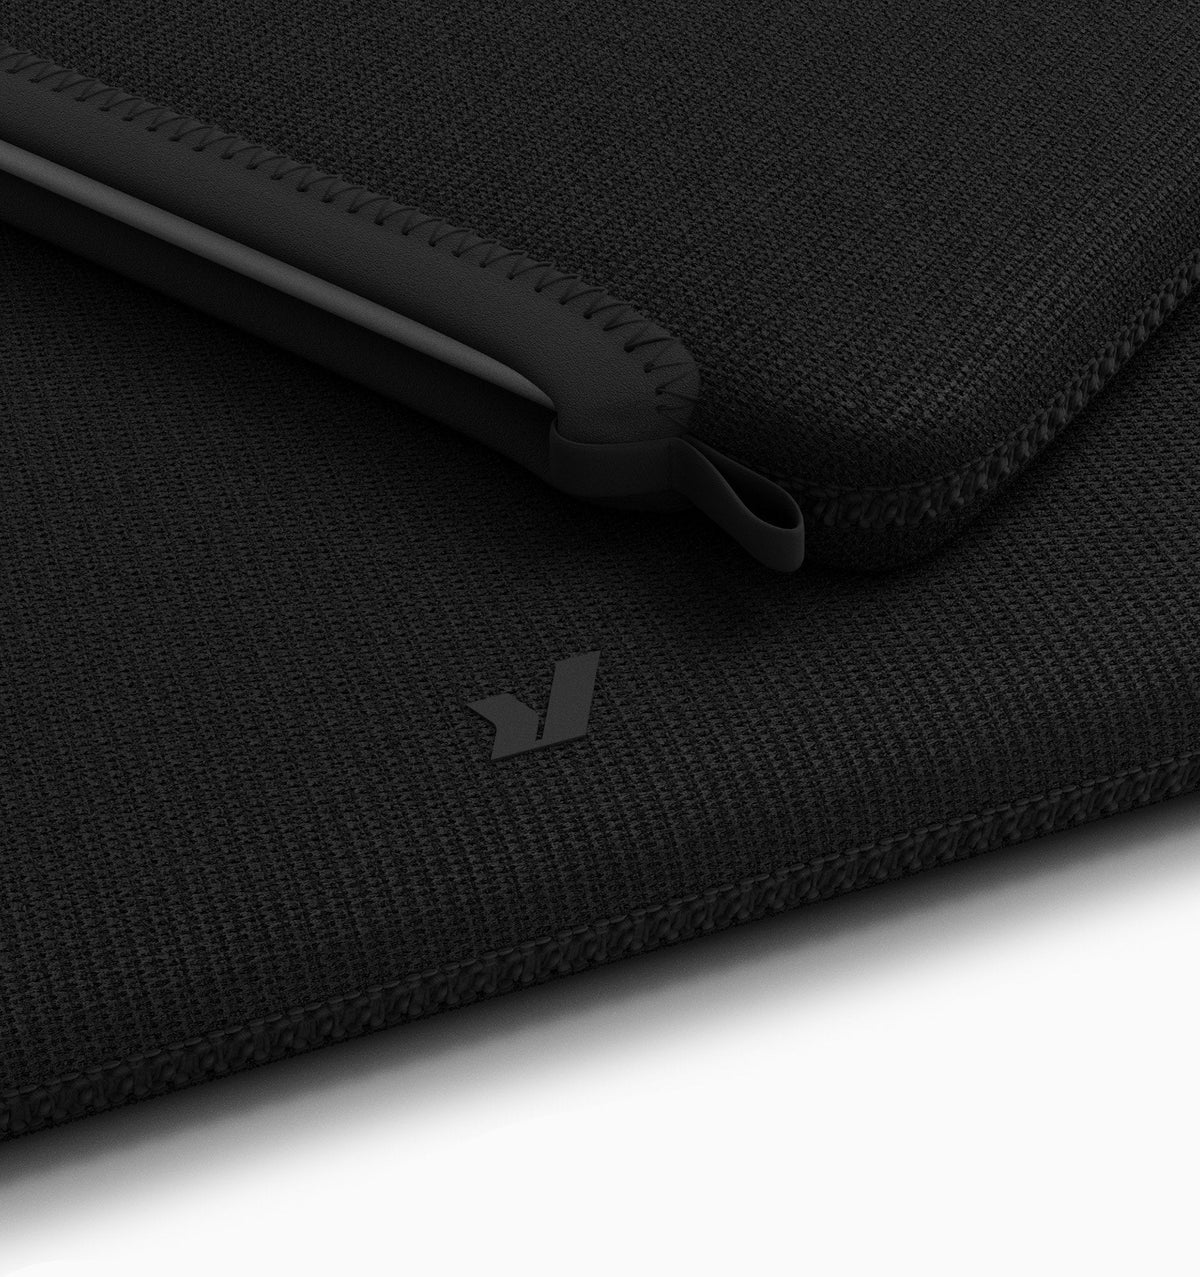 Rushfaster Laptop Sleeve For 15" MacBook Air - Black